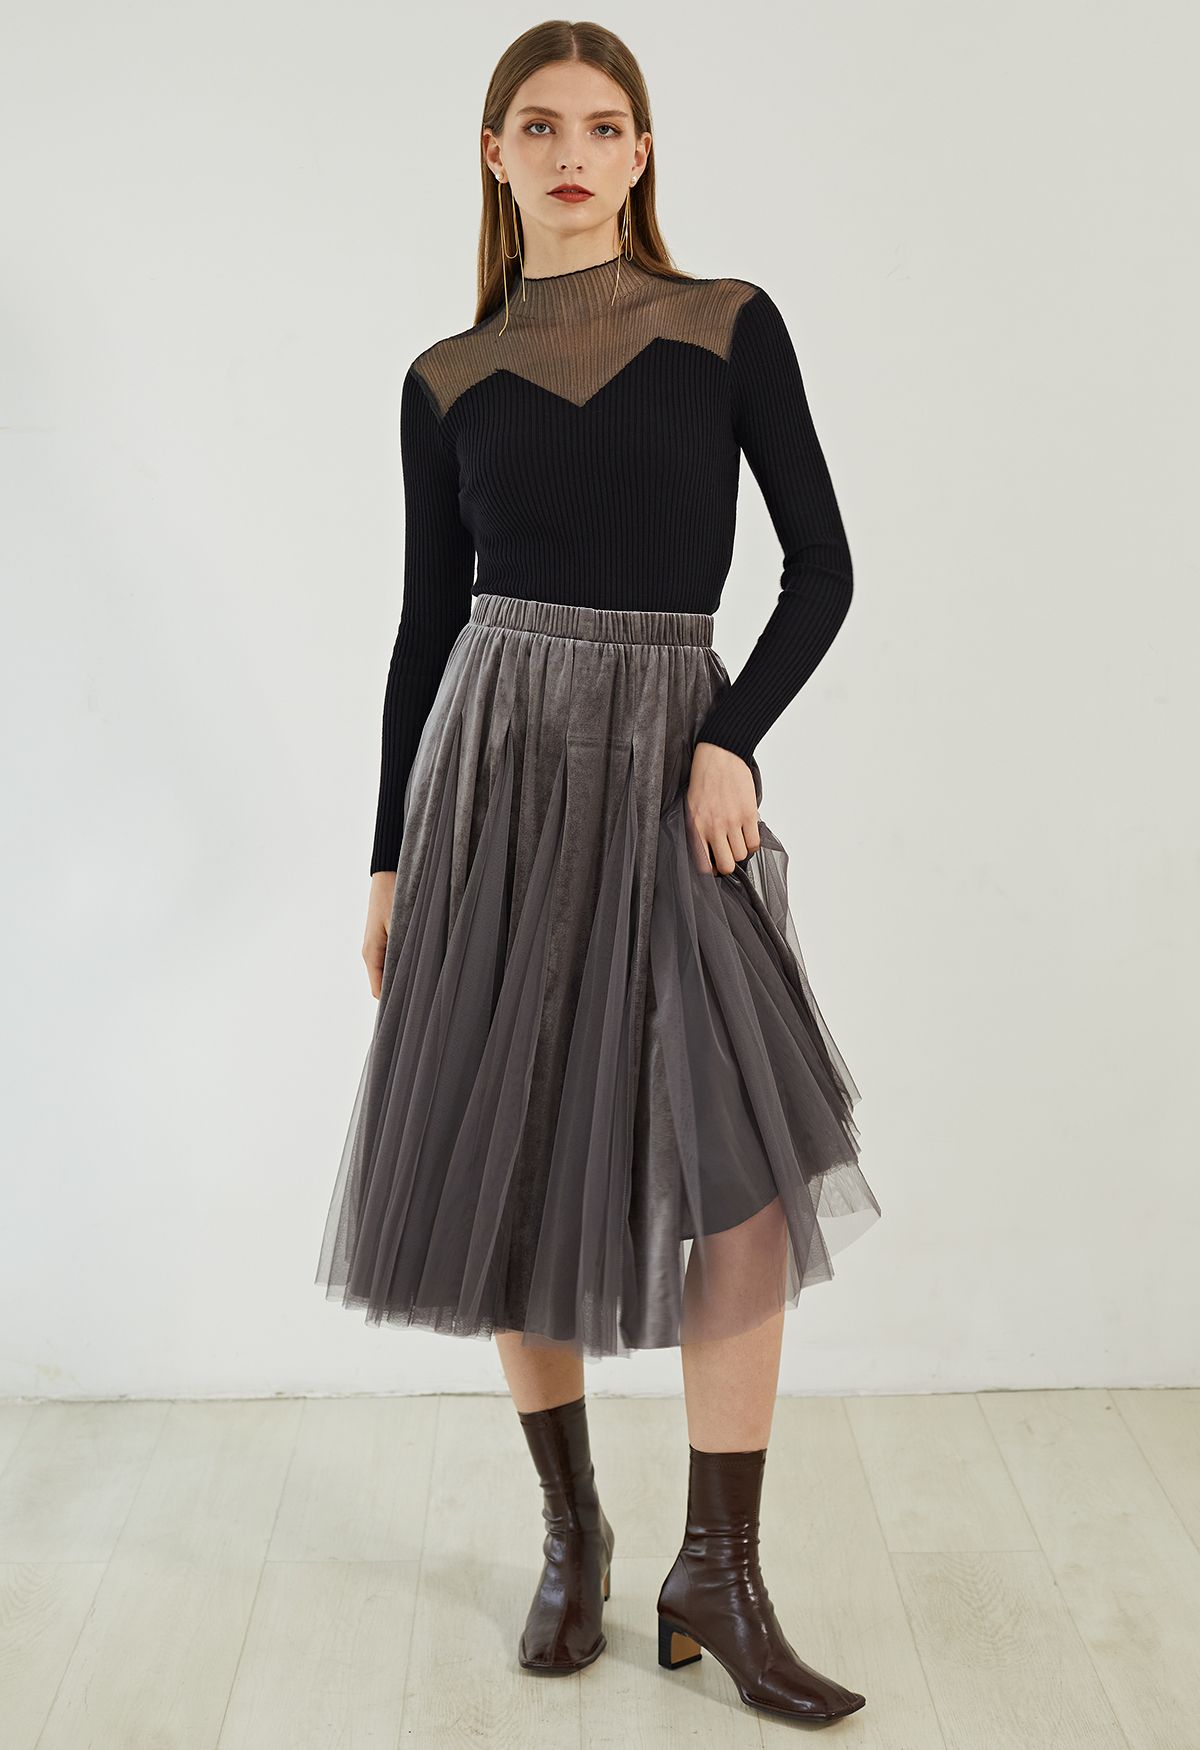 Falda midi con paneles de malla de terciopelo en gris